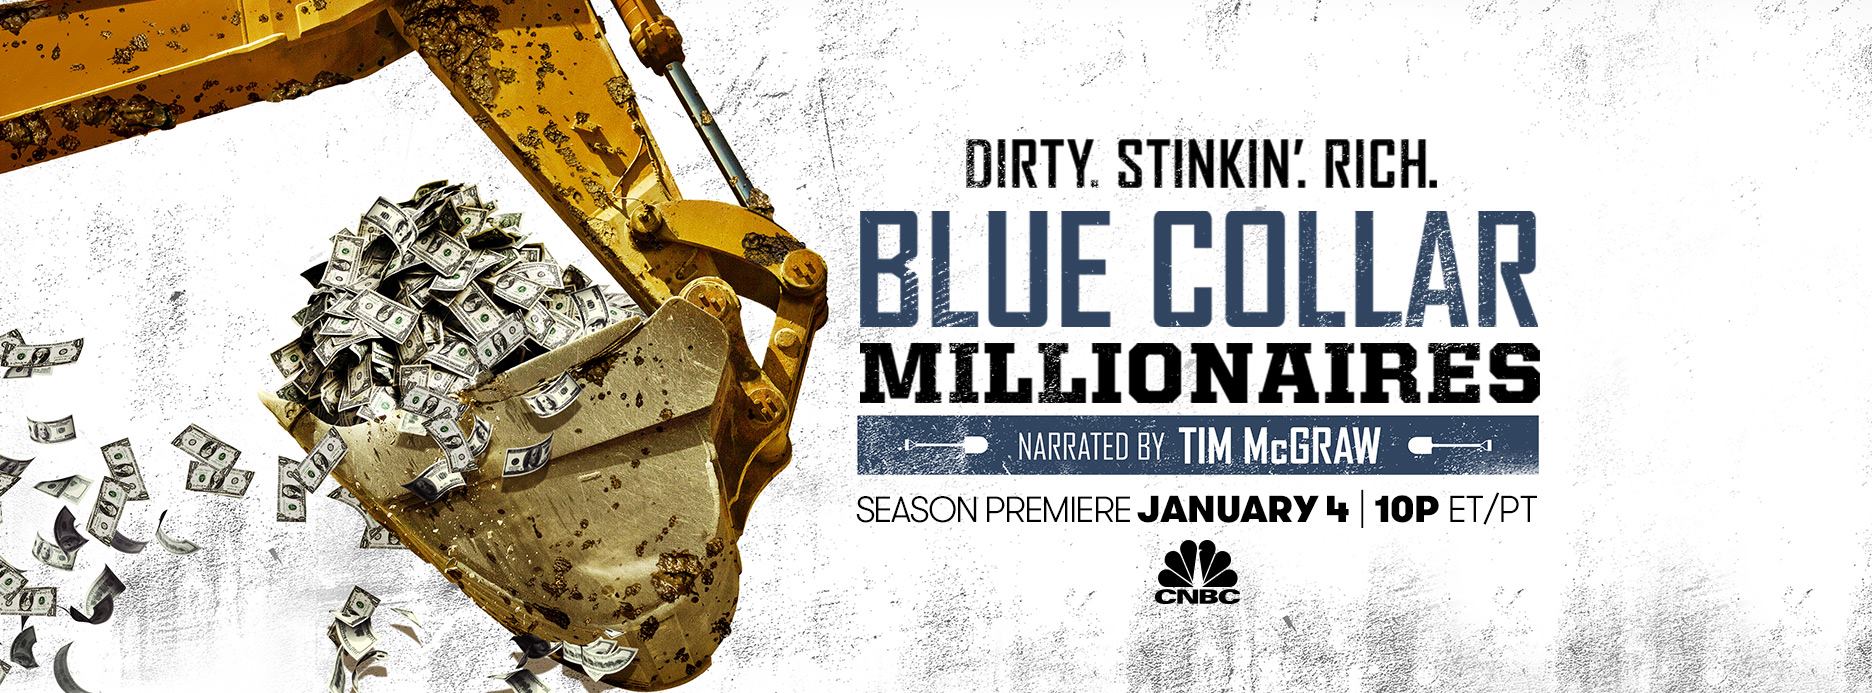 CNBC’s ‘Blue Collar Millionaires’ Season 2 Premieres January 4th